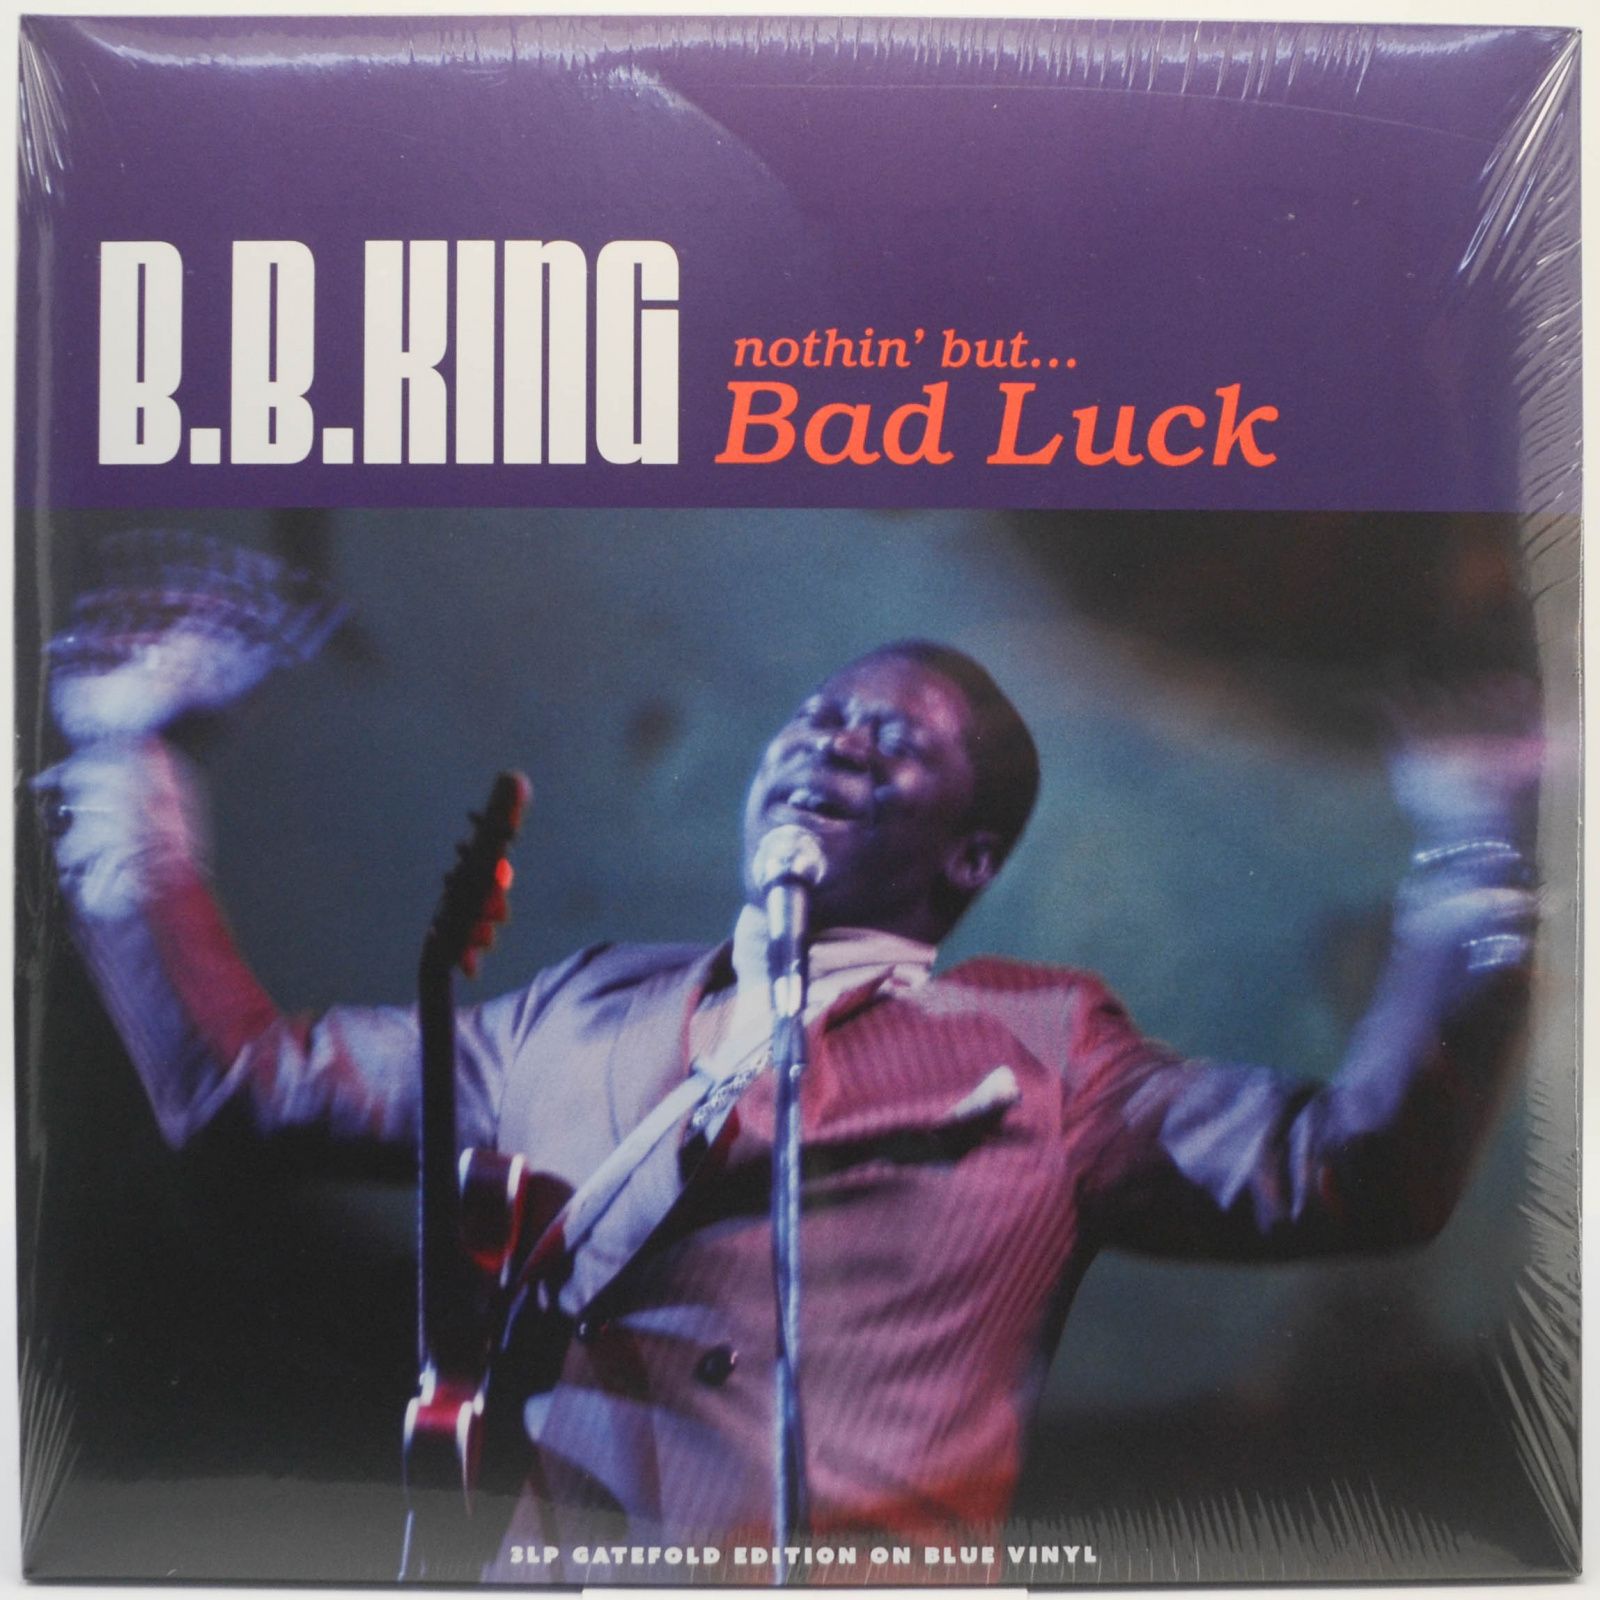 B.B. King — Nothin' But... Bad Luck (3LP), 2016